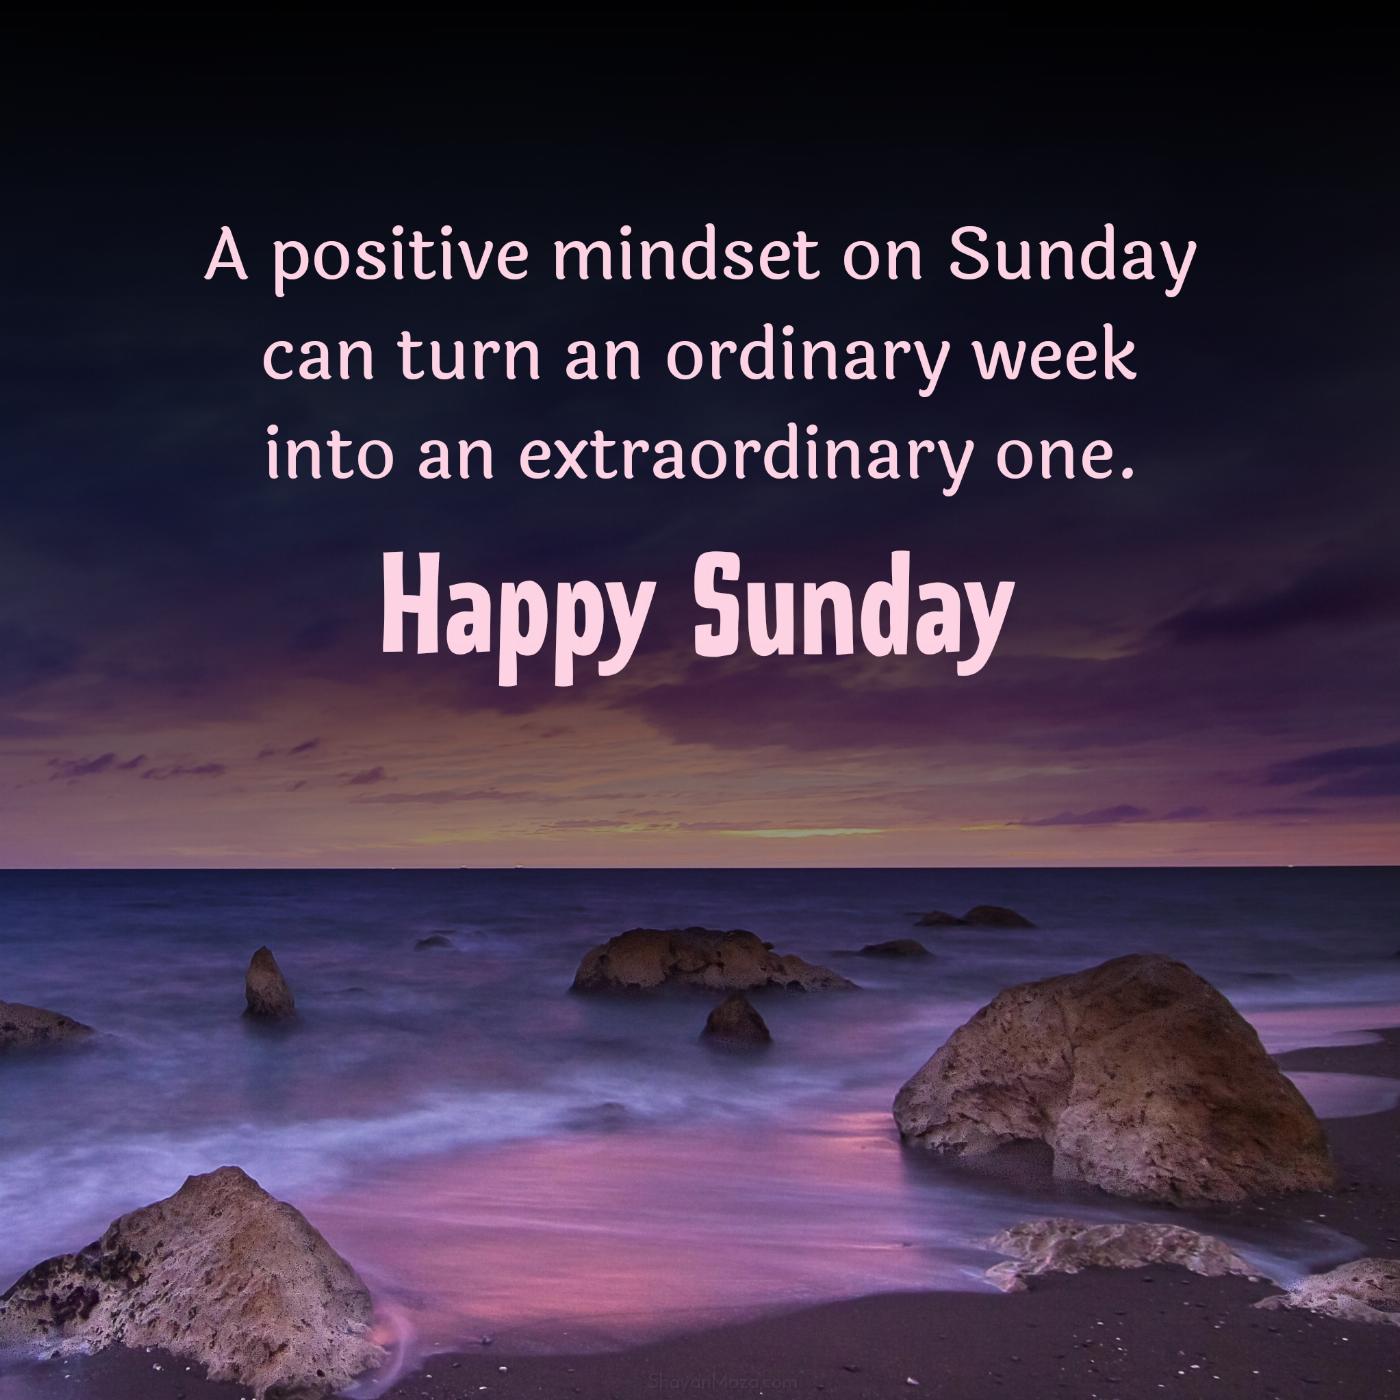 A positive mindset on Sunday can turn an ordinary week